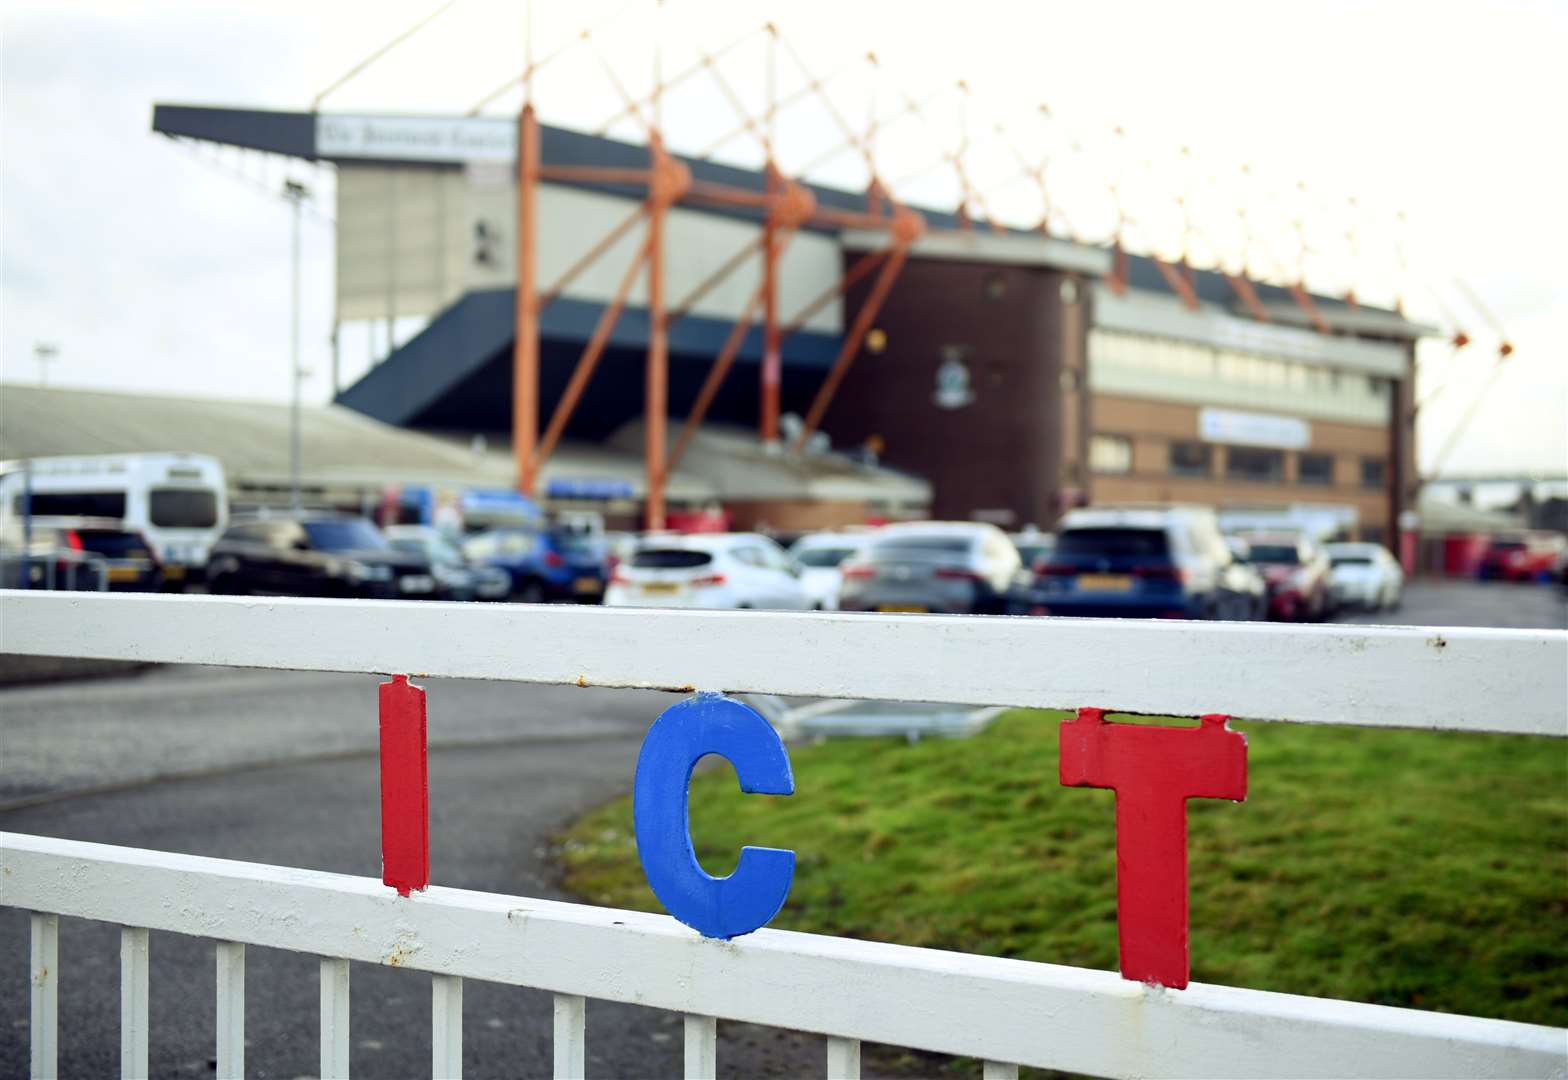 Inverness Caley Thistle Football Club stadium locator. Picture: James Mackenzie.